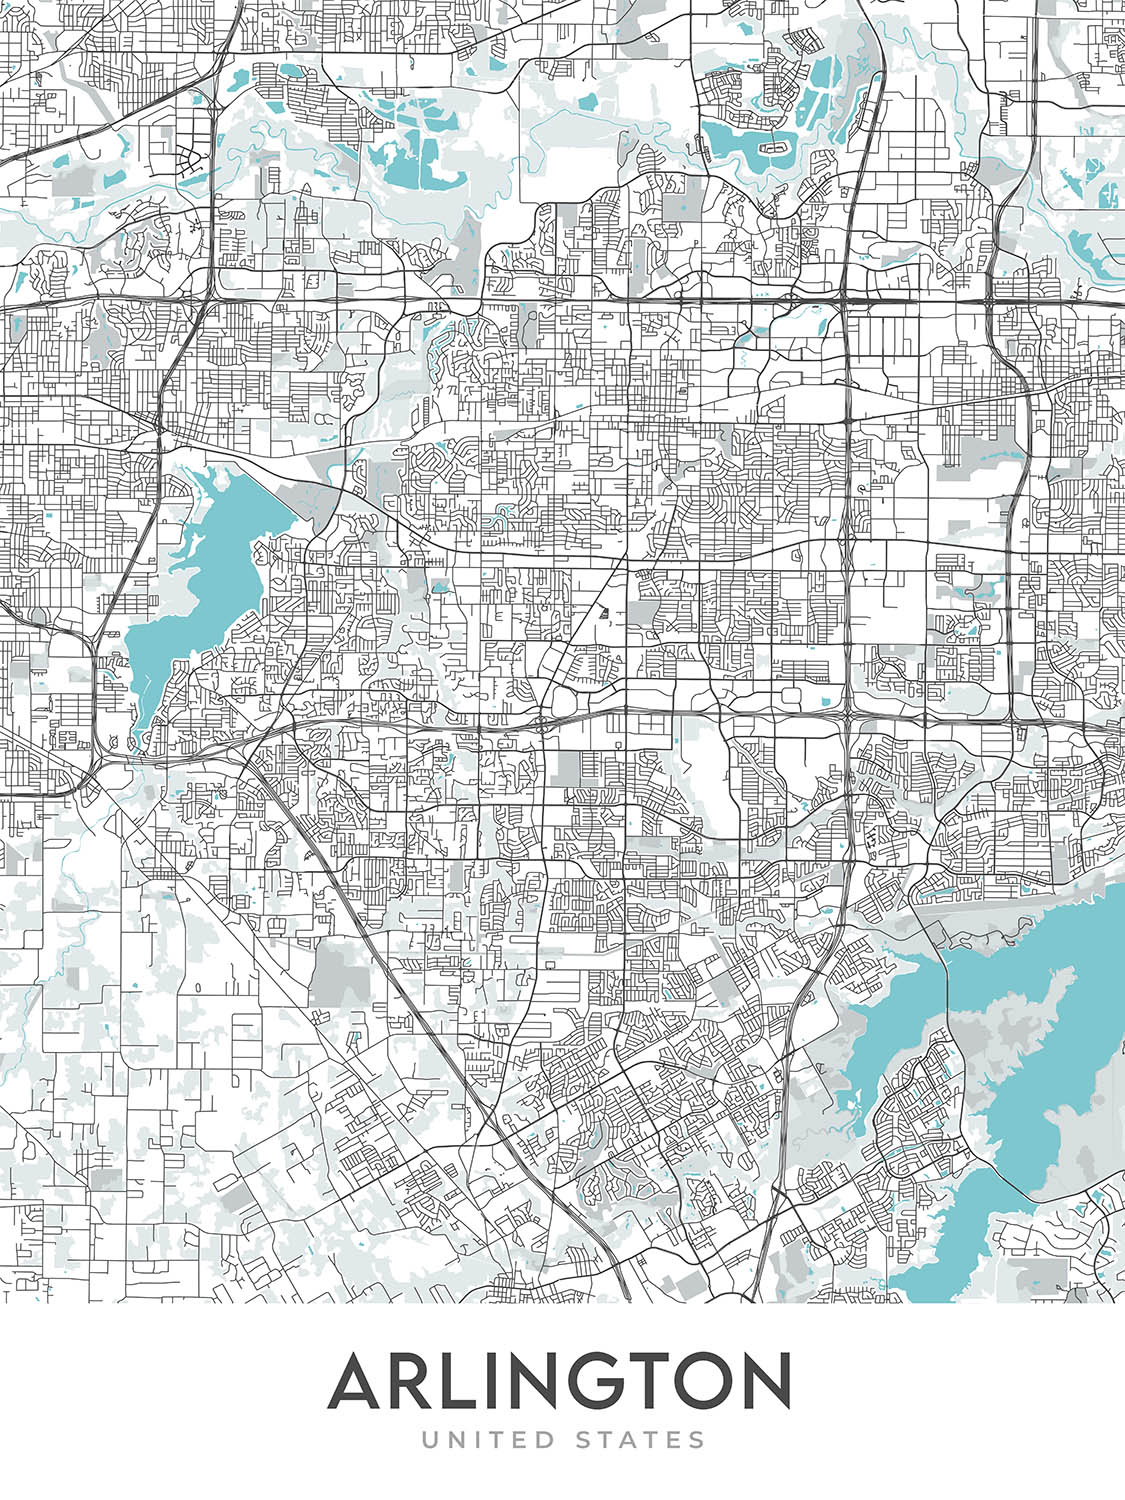 Plan de la ville moderne d'Arlington, Texas : stade AT&T, Globe Life Field, Six Flags, UTA, Pantego